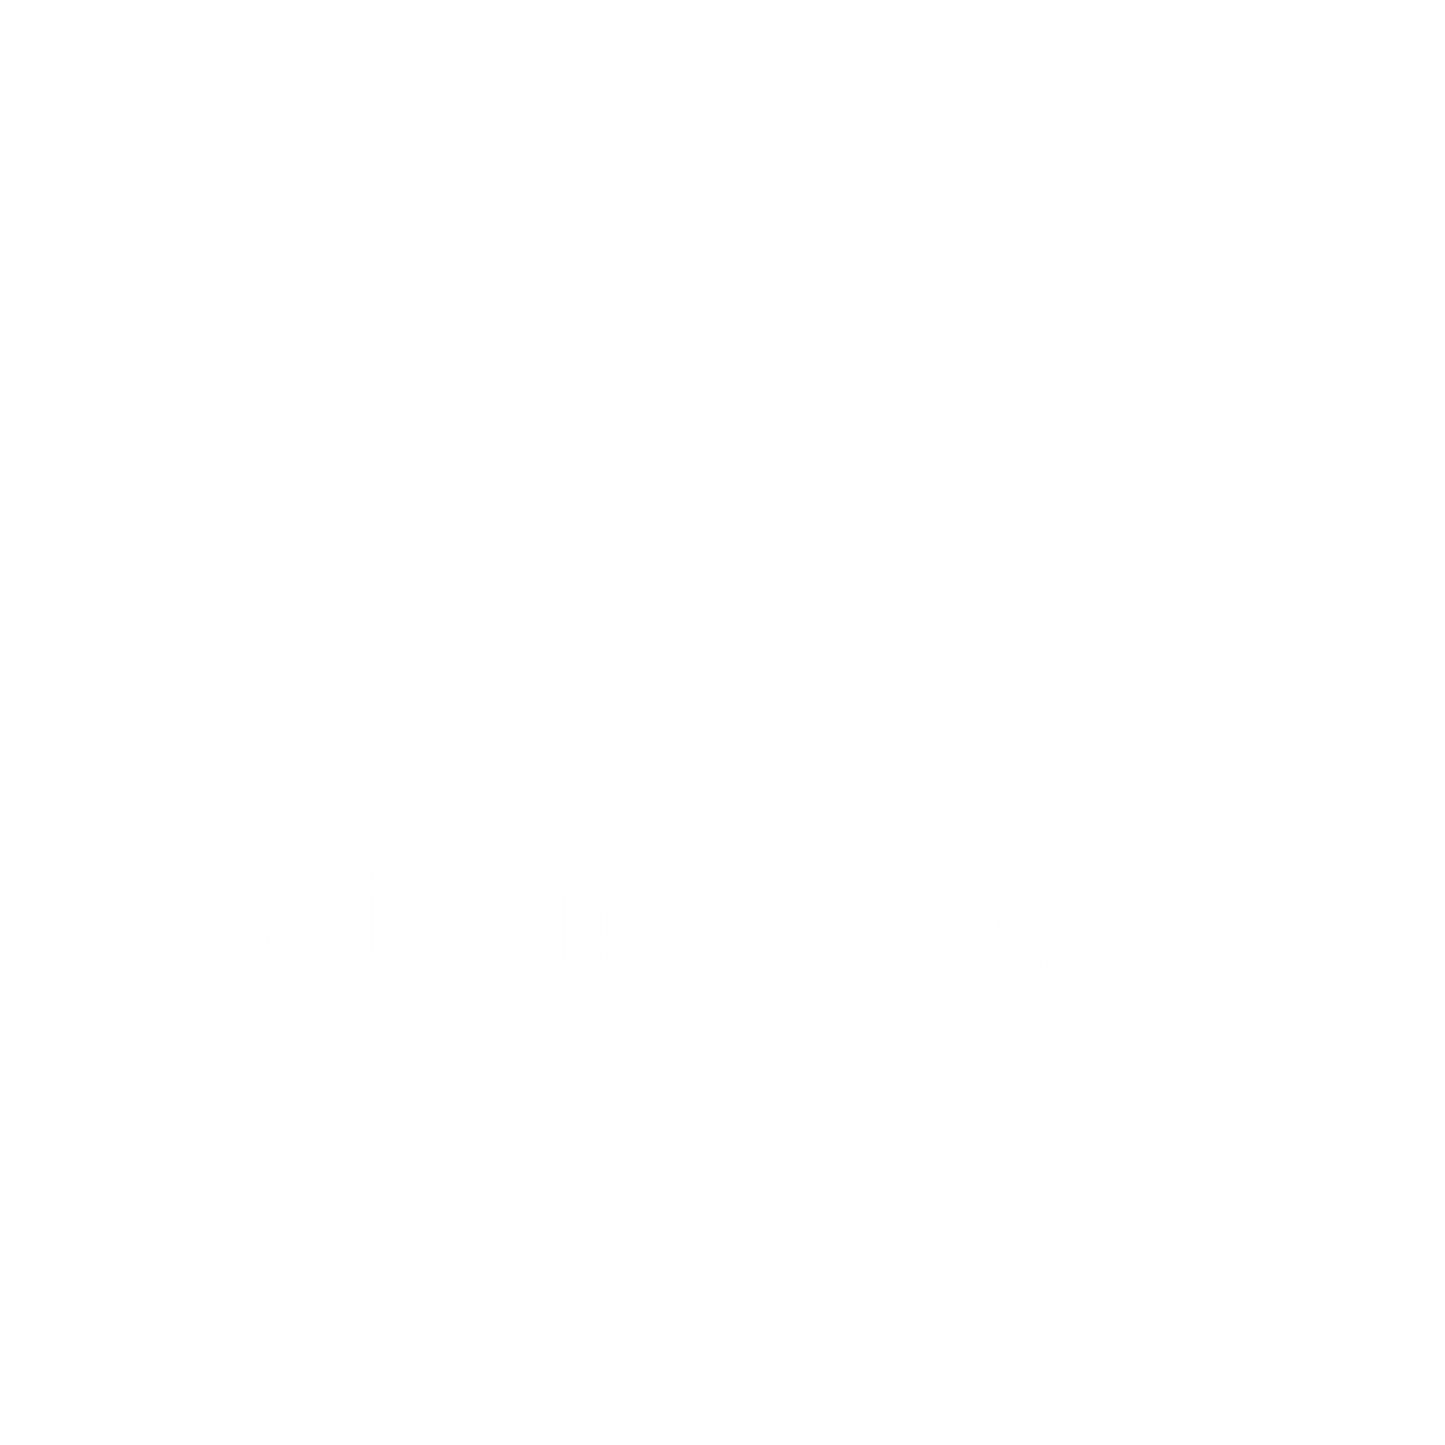 This Pandemic Isn't Fun Anymore